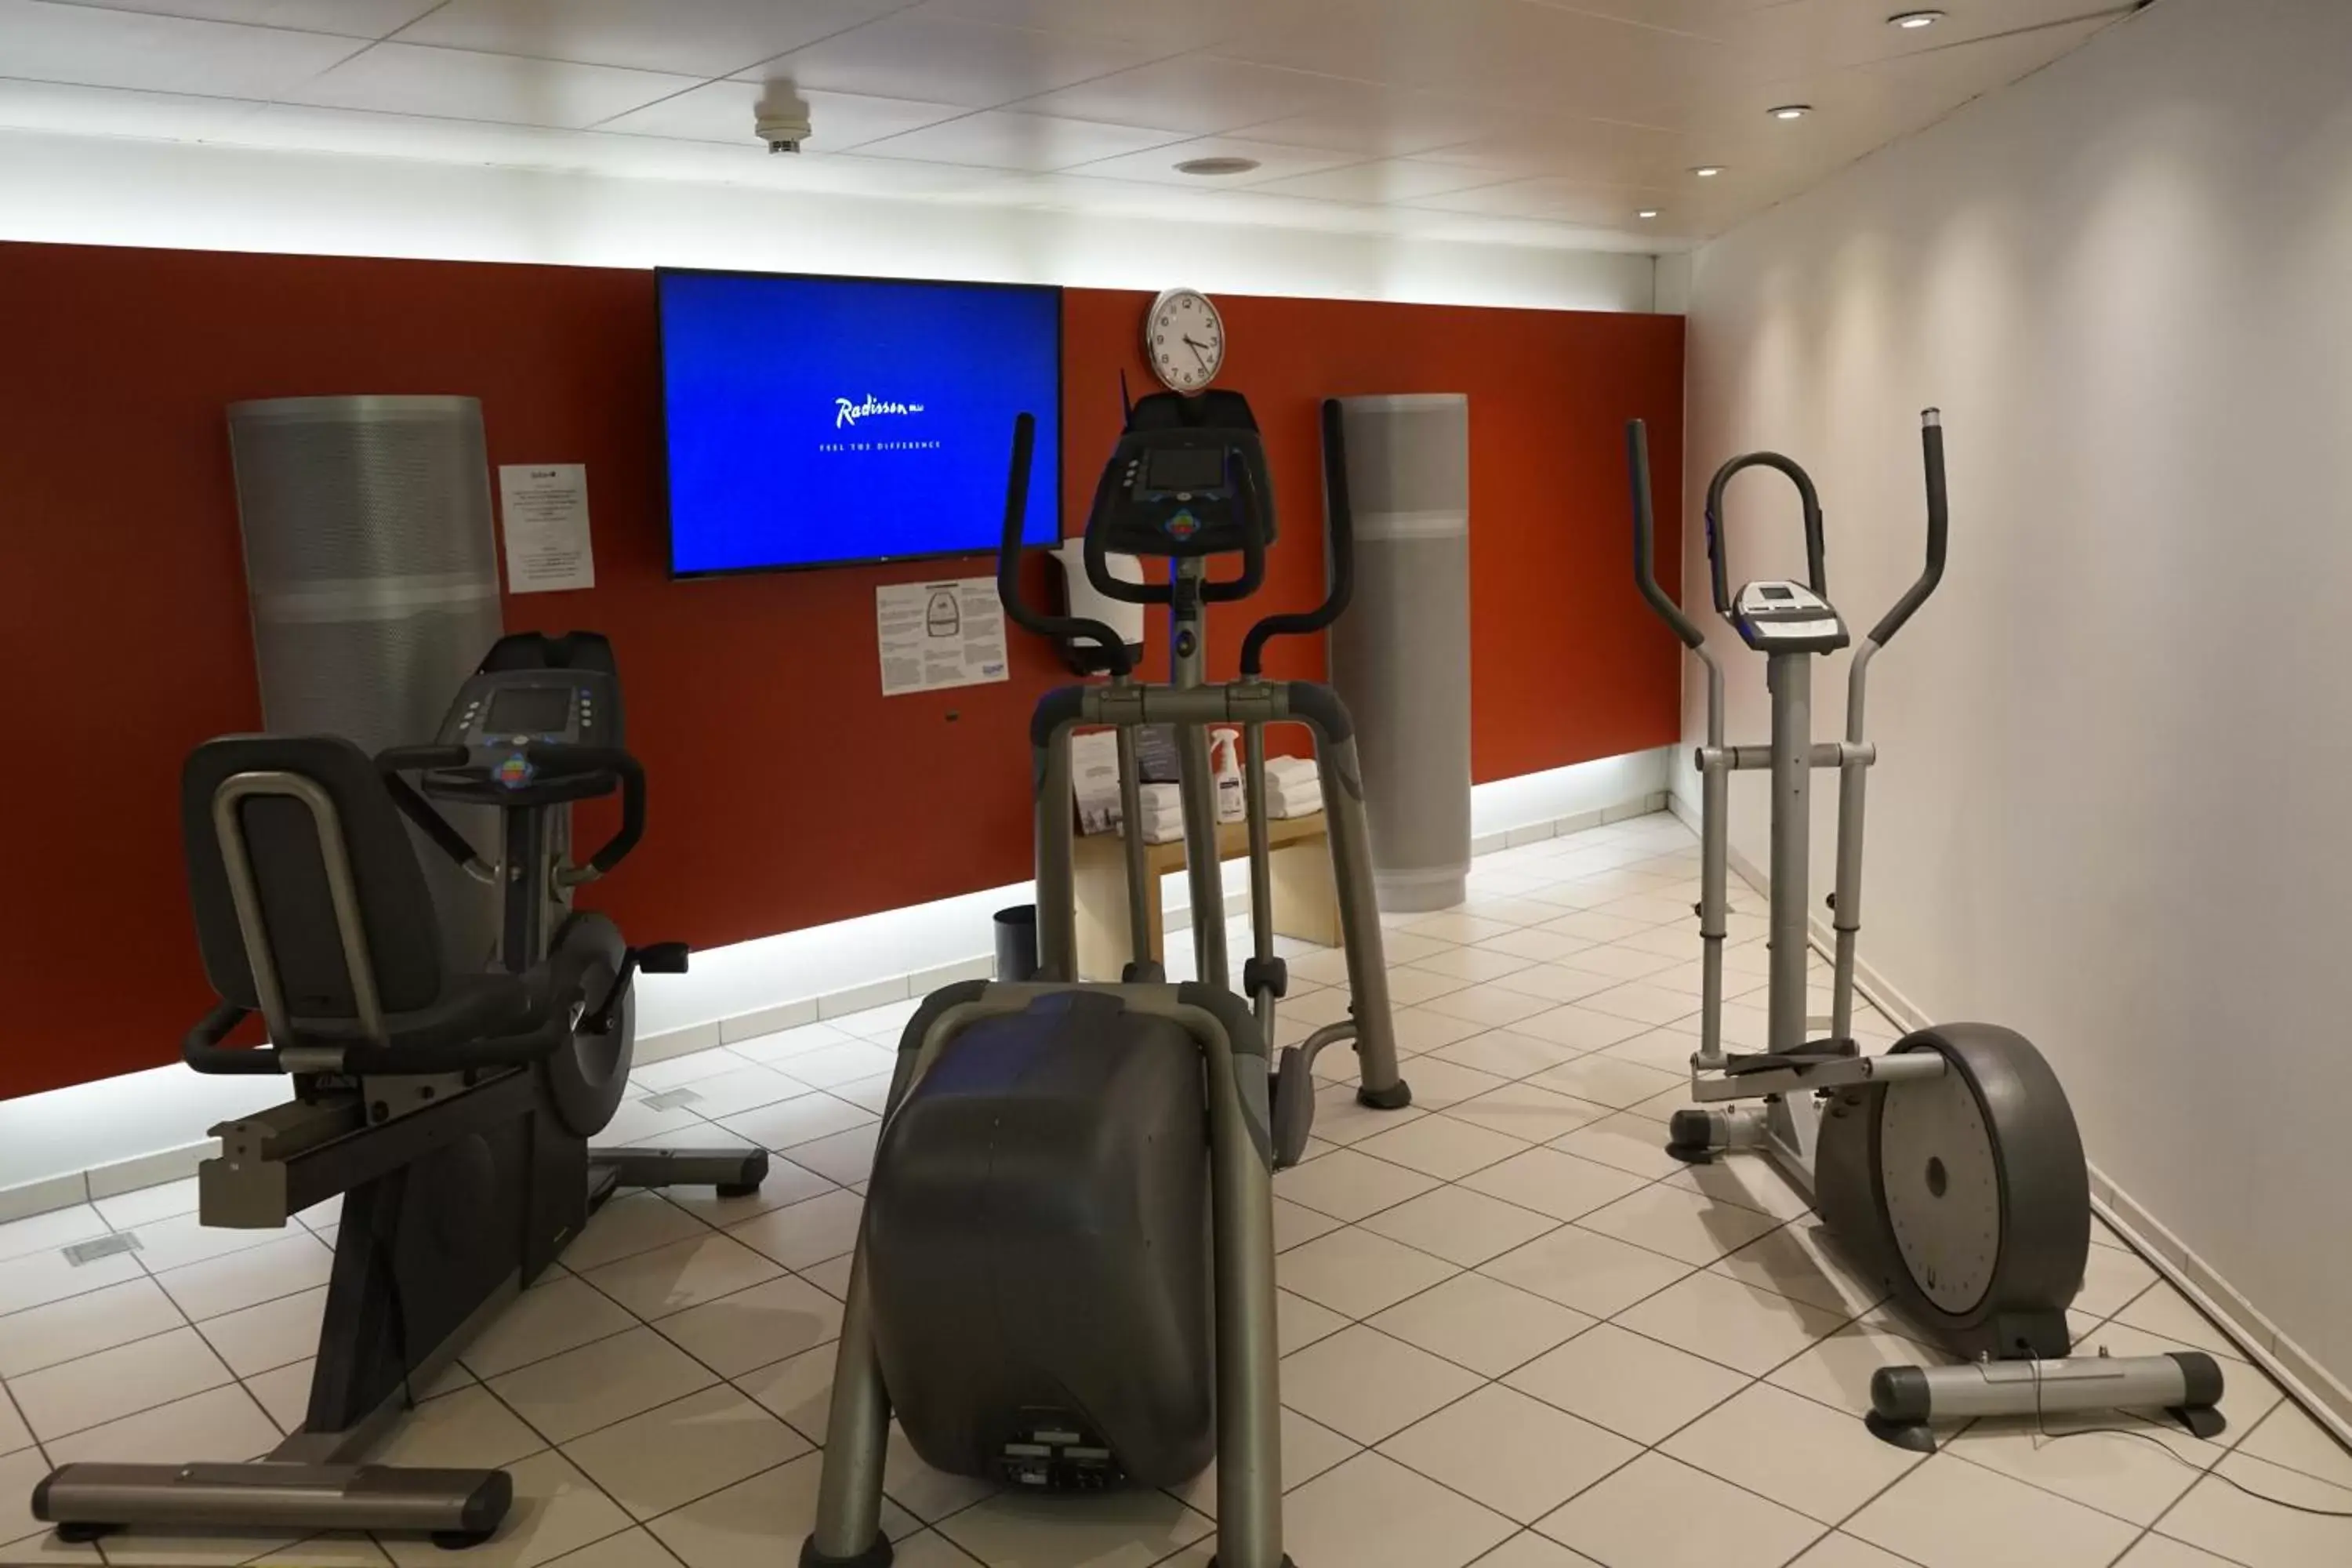 Fitness centre/facilities, Fitness Center/Facilities in Radisson Blu Hotel, St. Gallen